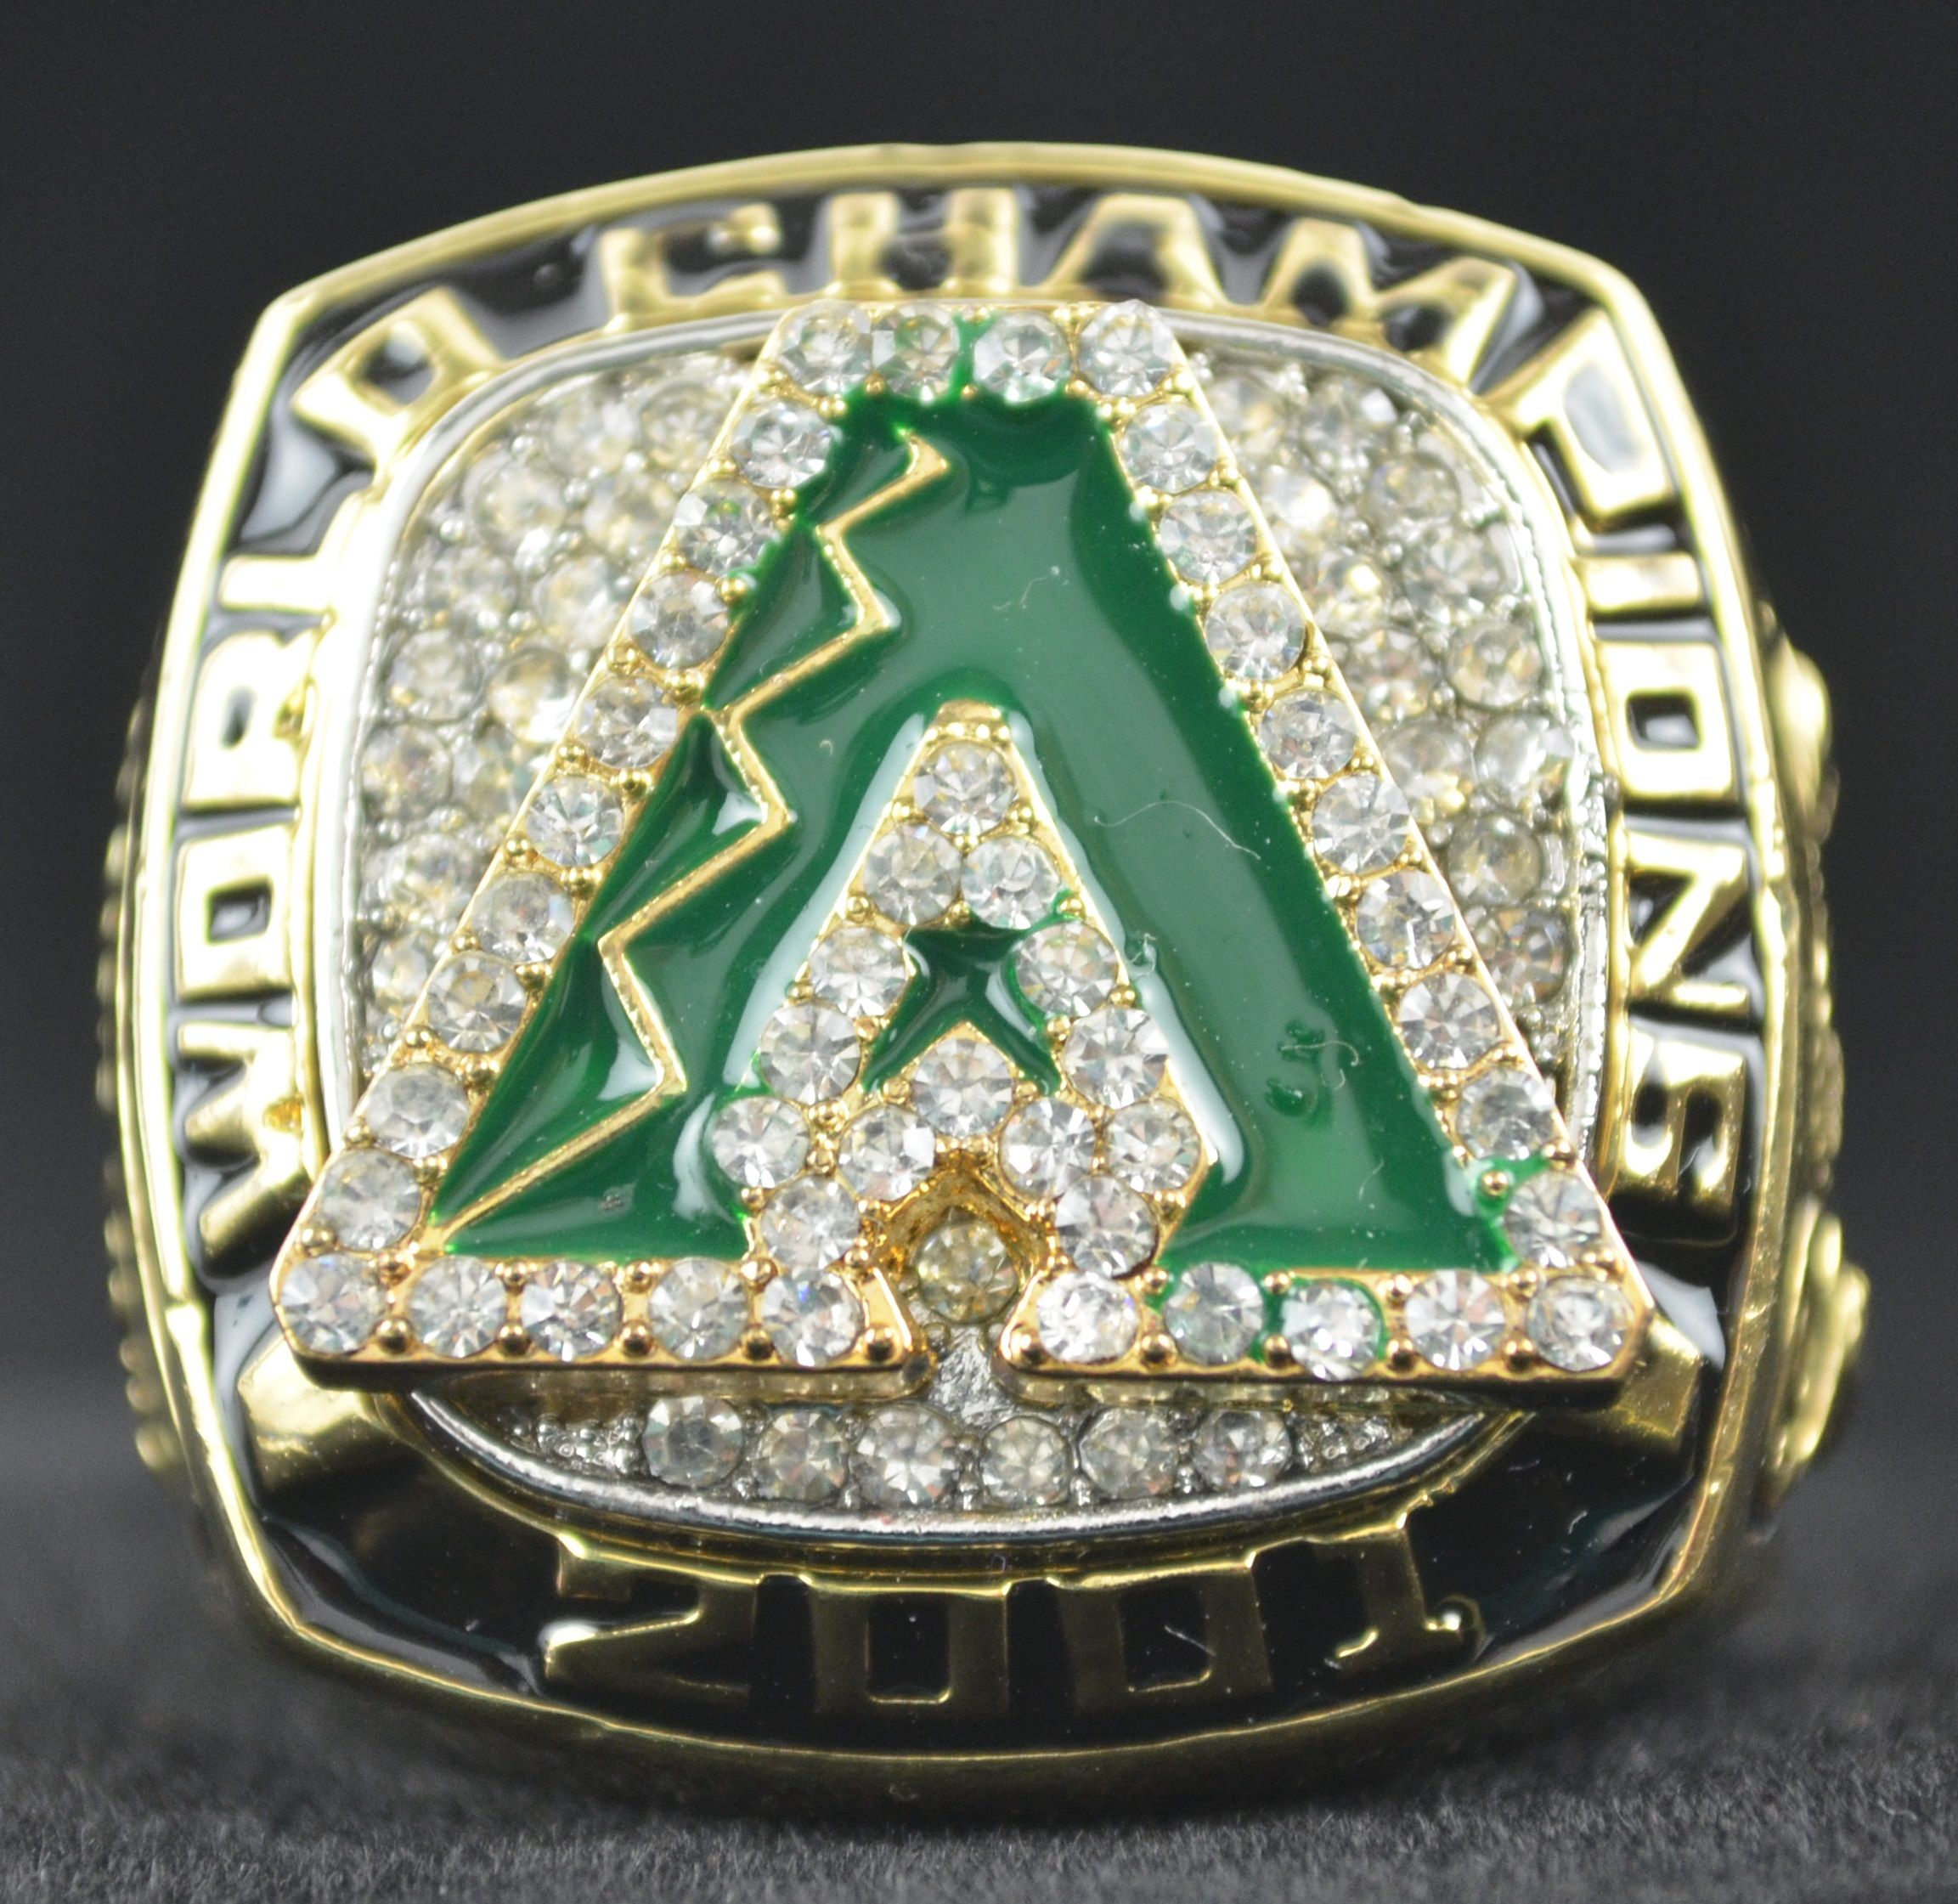 Lot Detail - Arizona Diamondbacks 2001 World Series Championship Ring